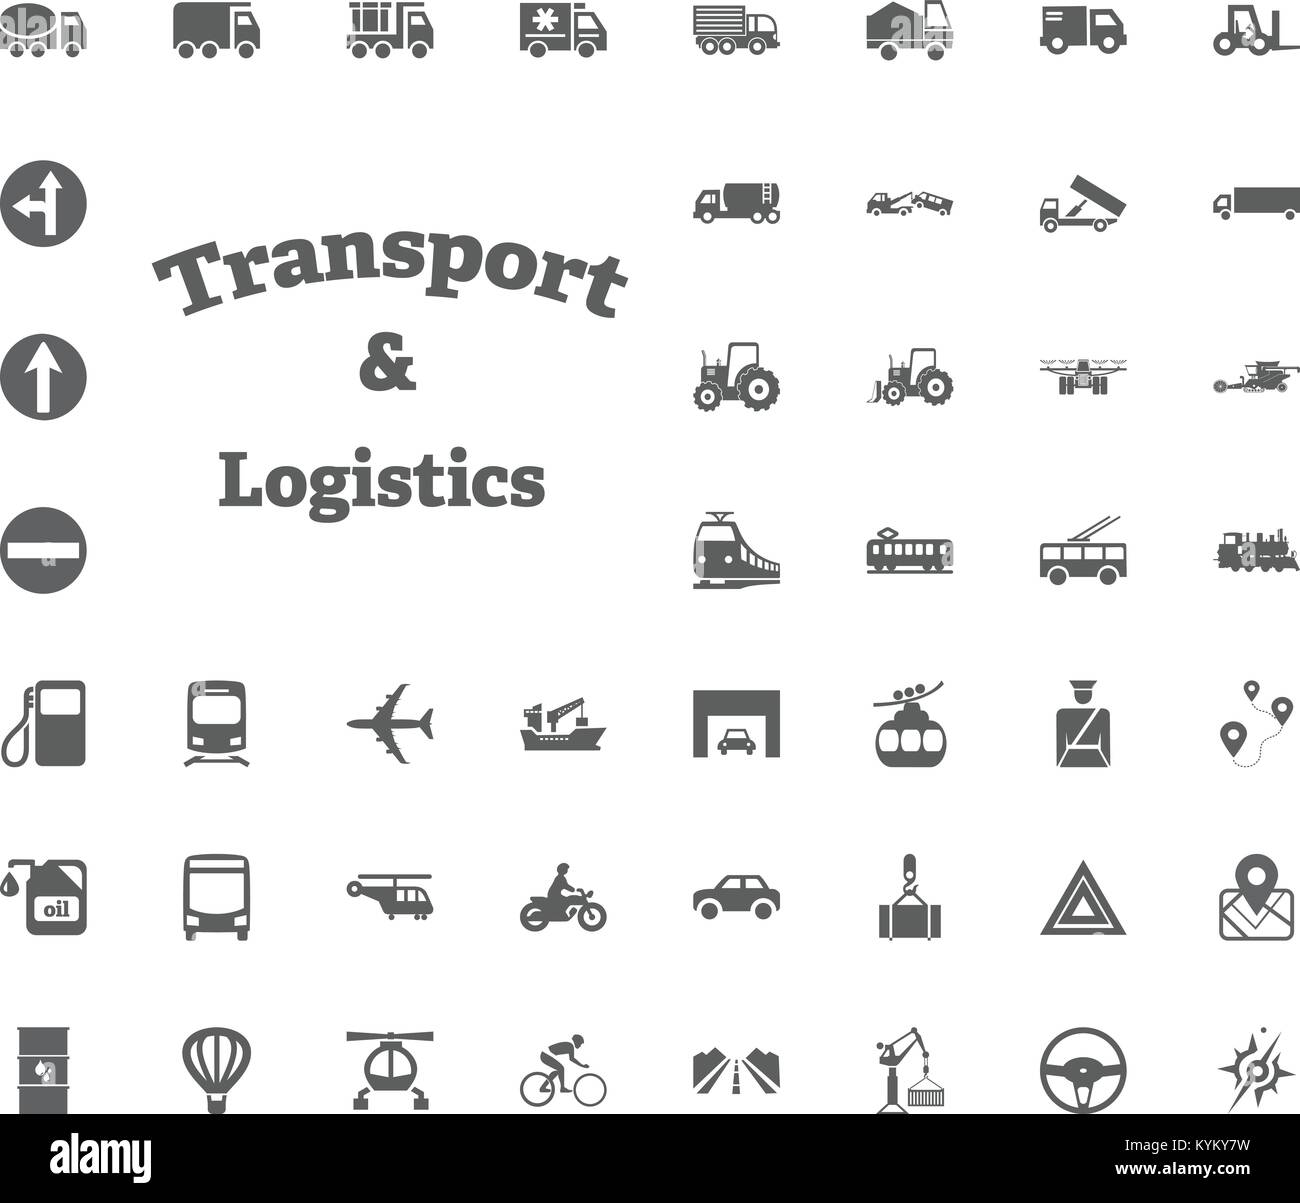 Transport and Logistics set icons. Transportation set icons Stock Vector